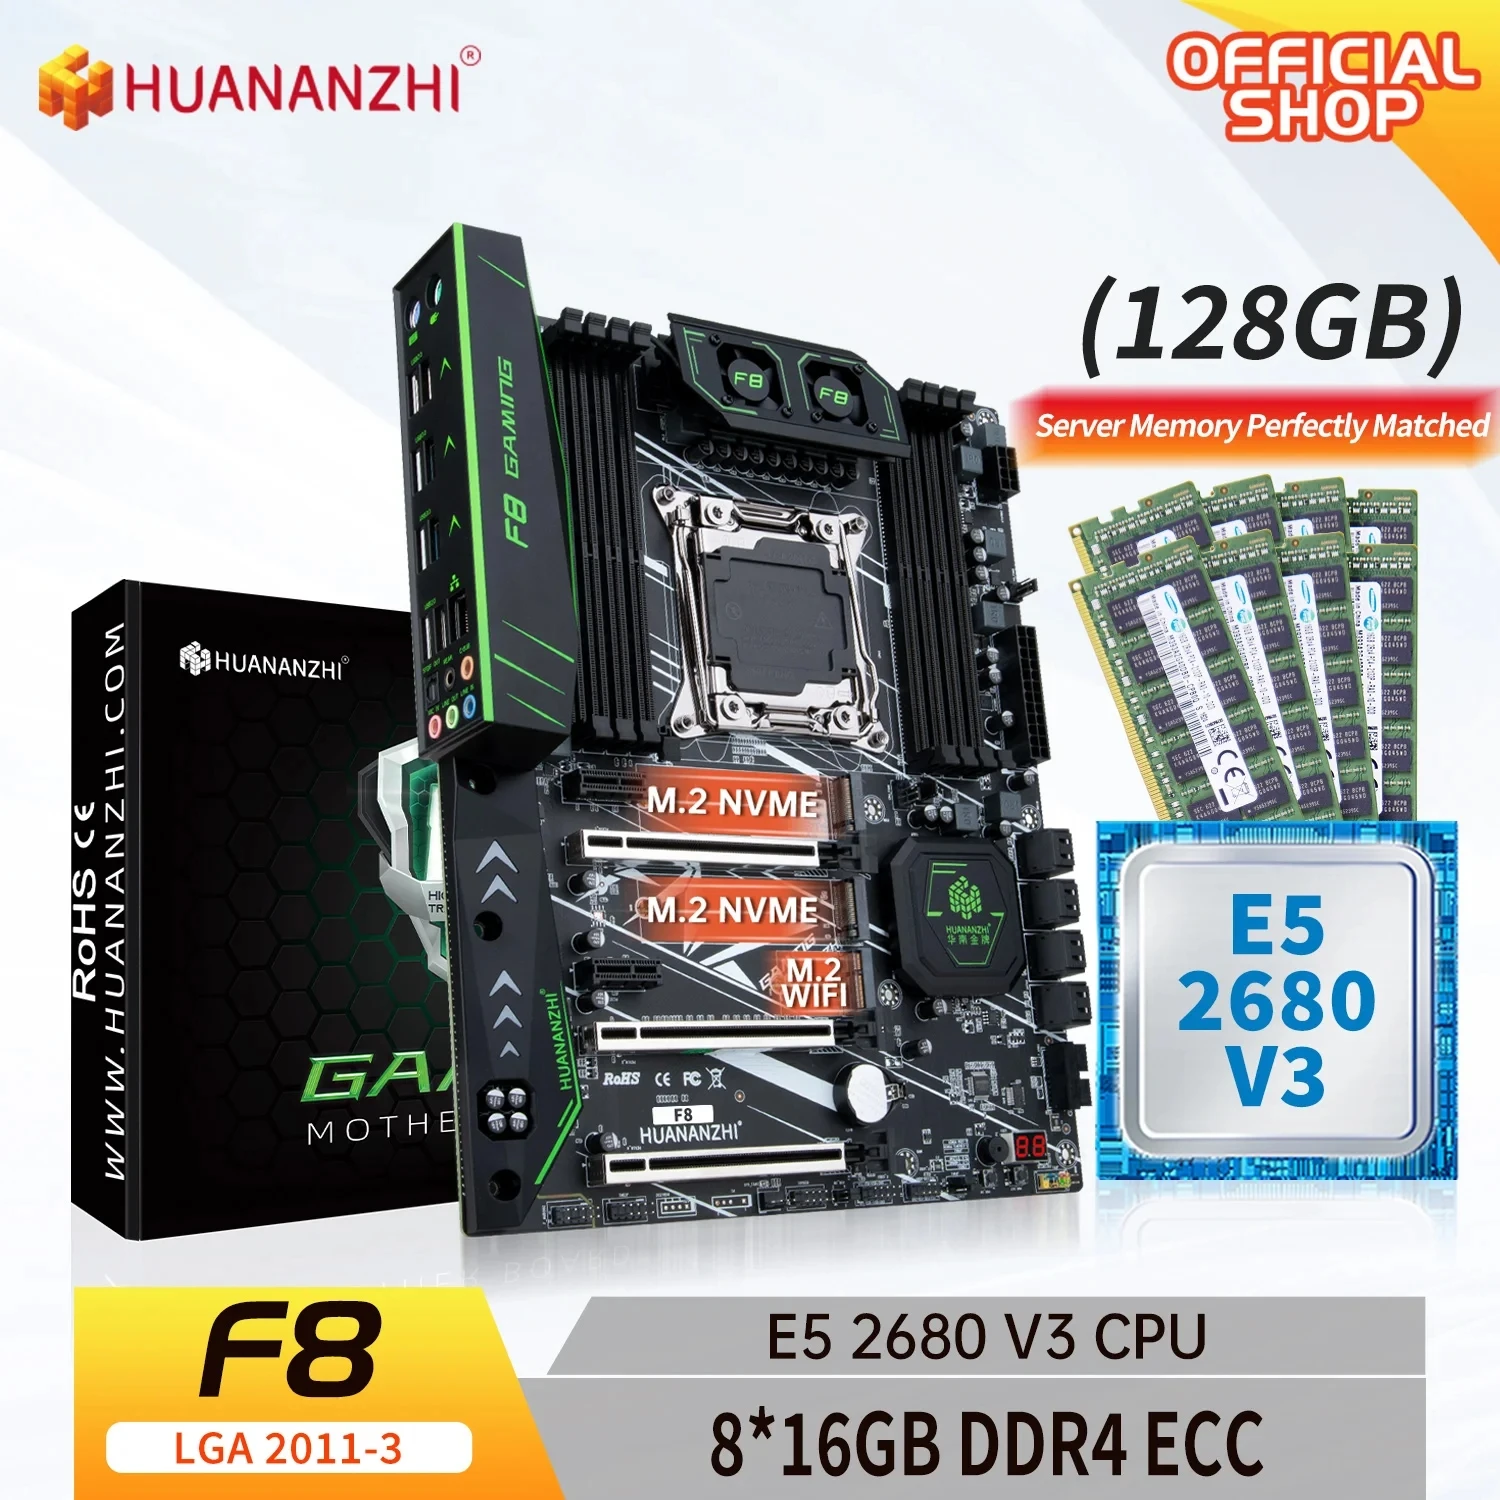 

HUANANZHI X99 F8 LGA 2011-3 XEON X99 материнская плата с Intel E5 2680 V3 с 8*16G DDR4 RECC память комбинированный комплект NVME SATA